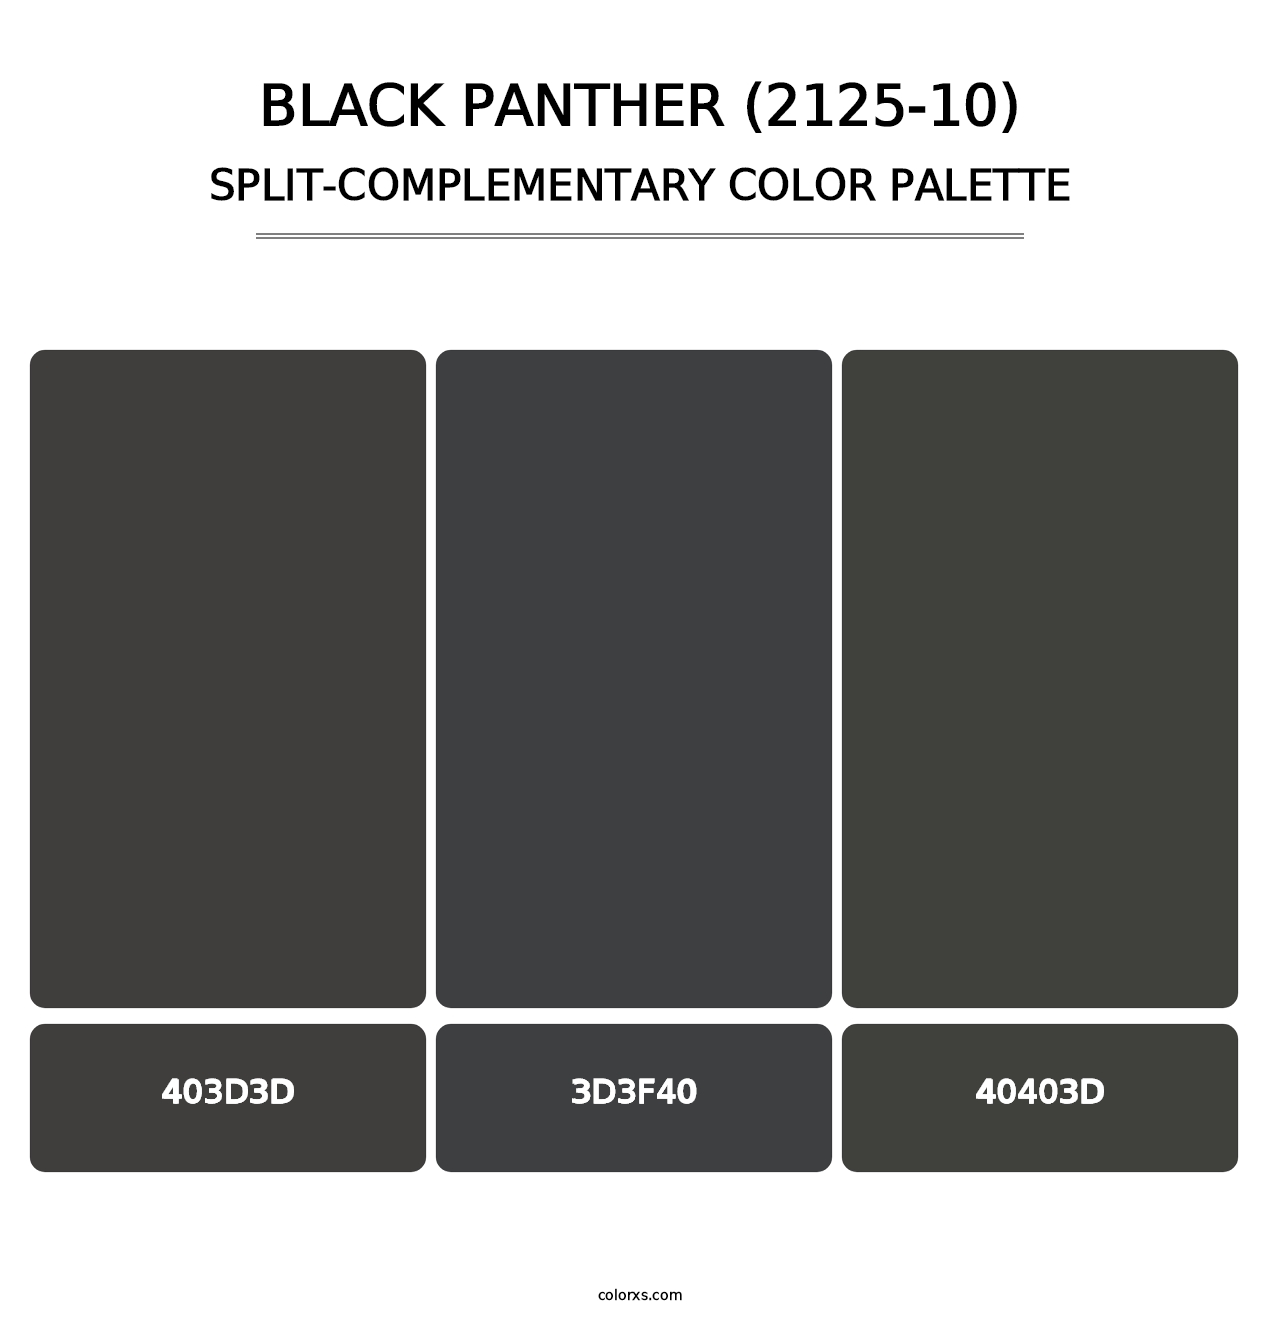 Black Panther (2125-10) - Split-Complementary Color Palette